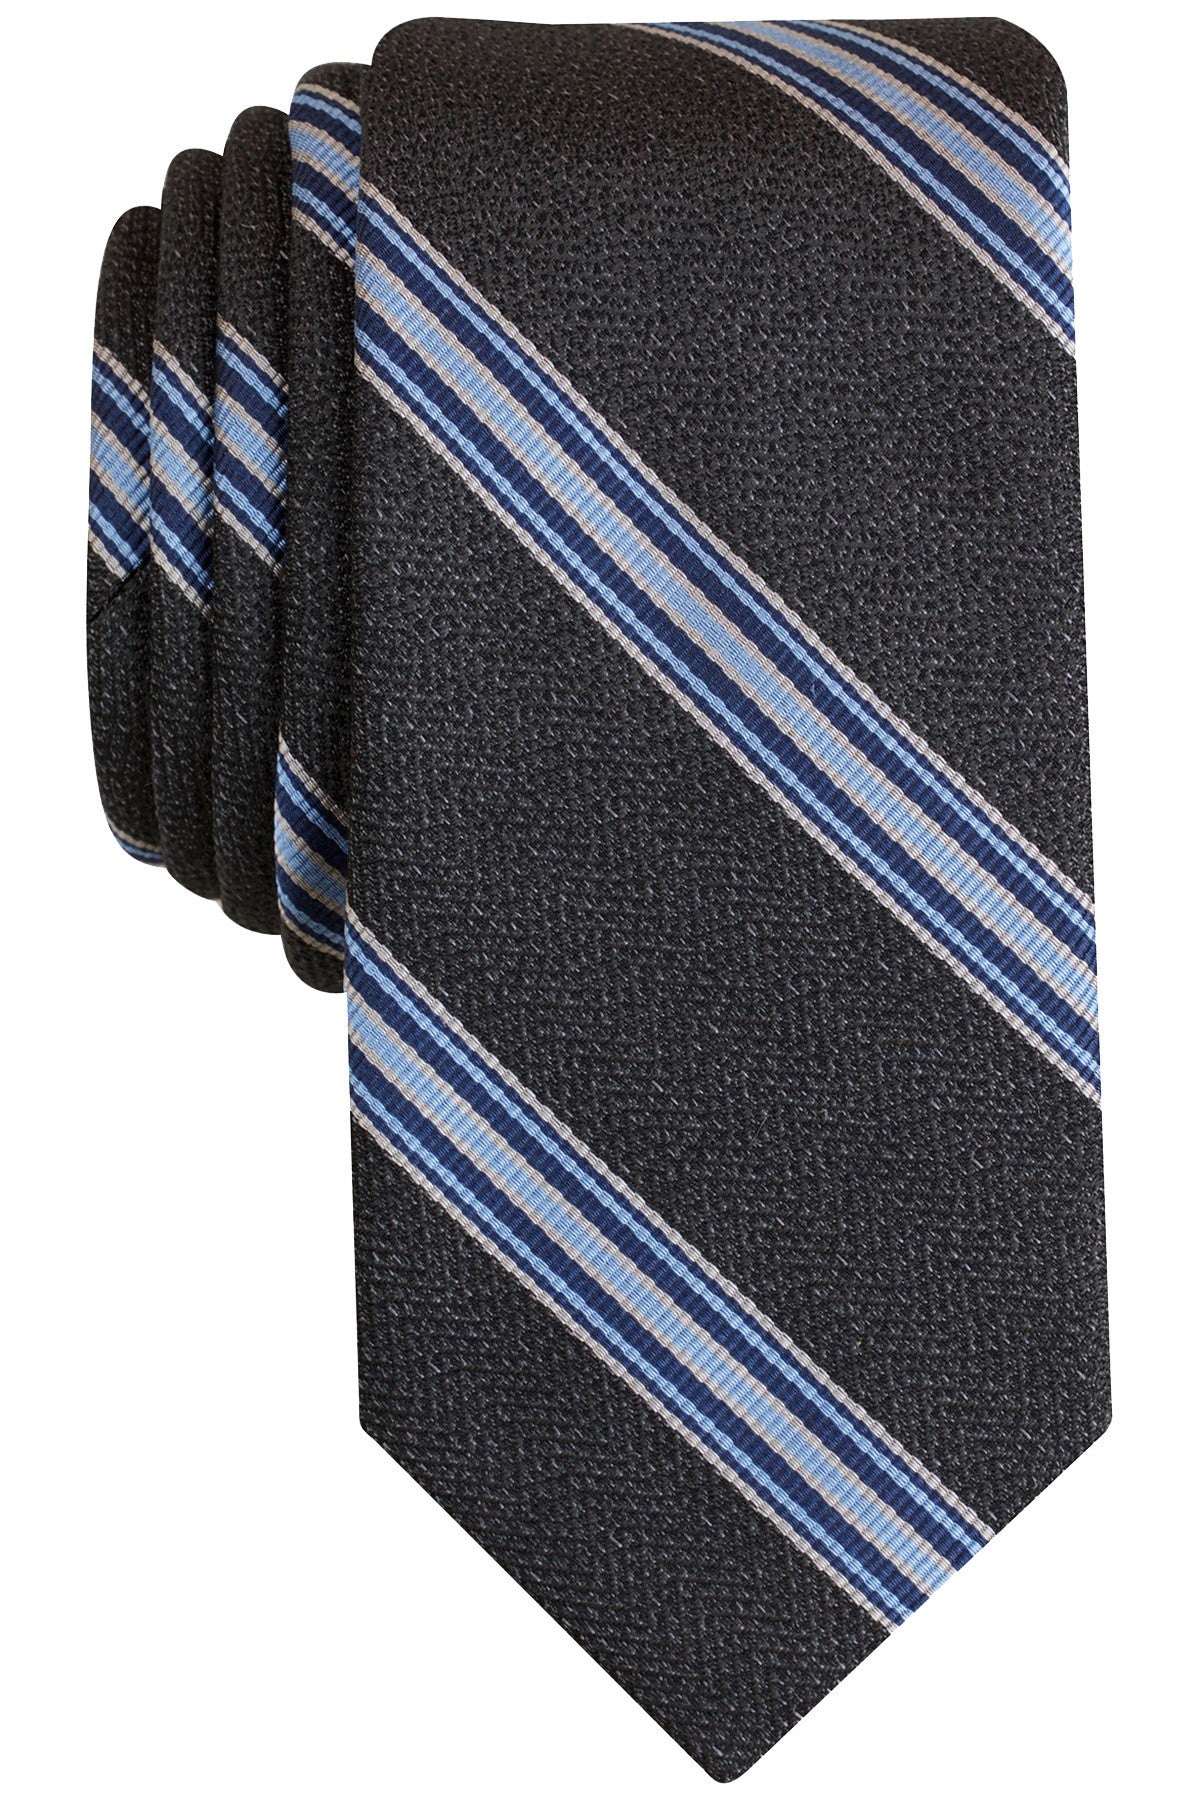 Bar III Black/Blue Corby Stripe Skinny Tie